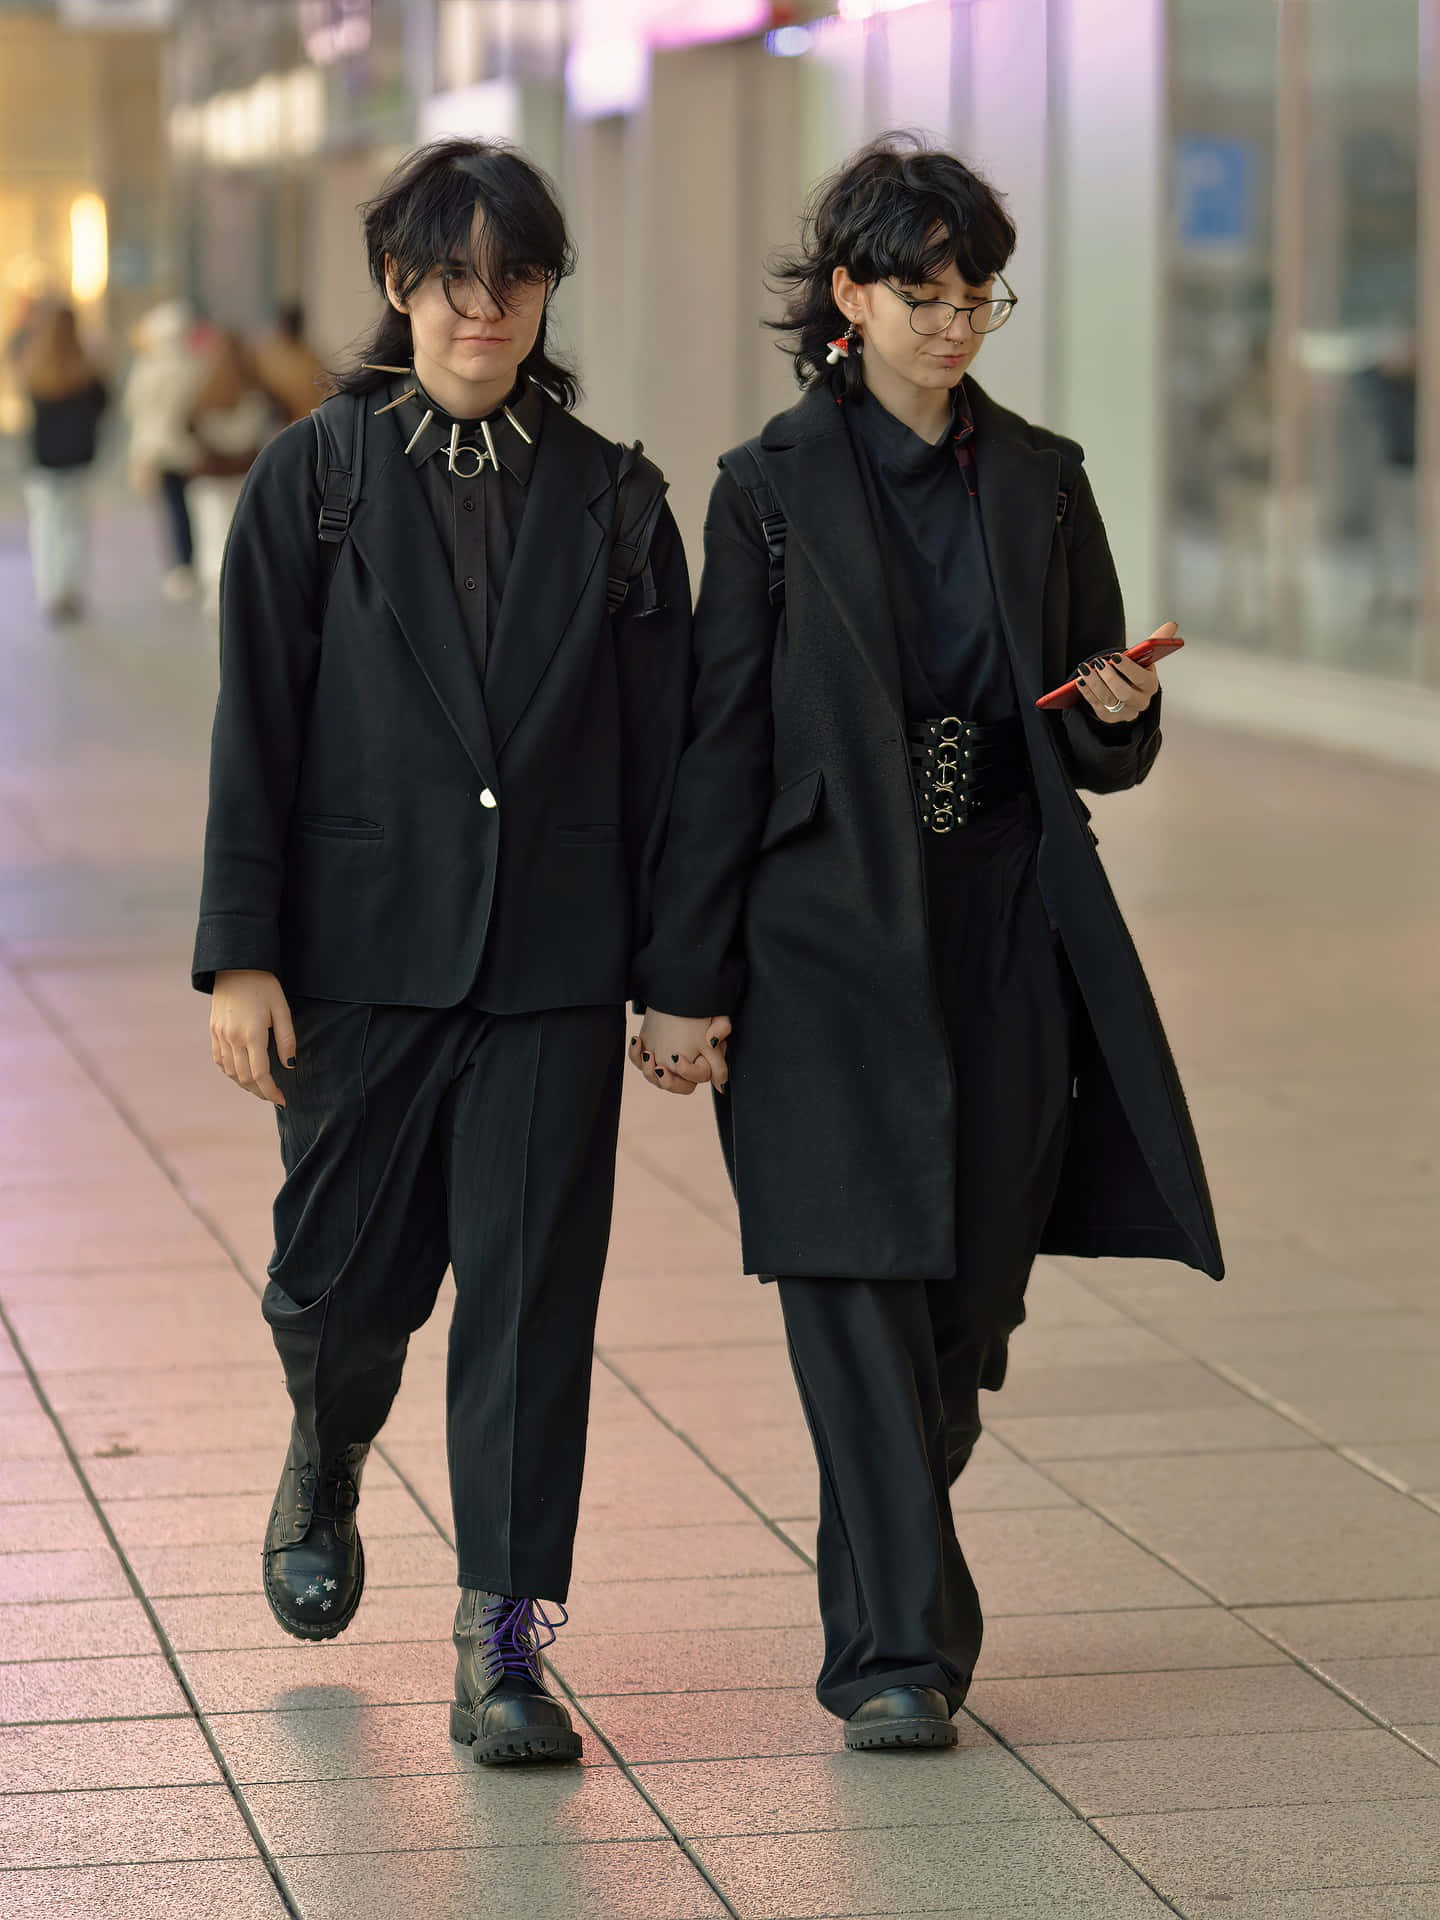 Mujeres Lesbianas Wearing Black Attire Wallpaper